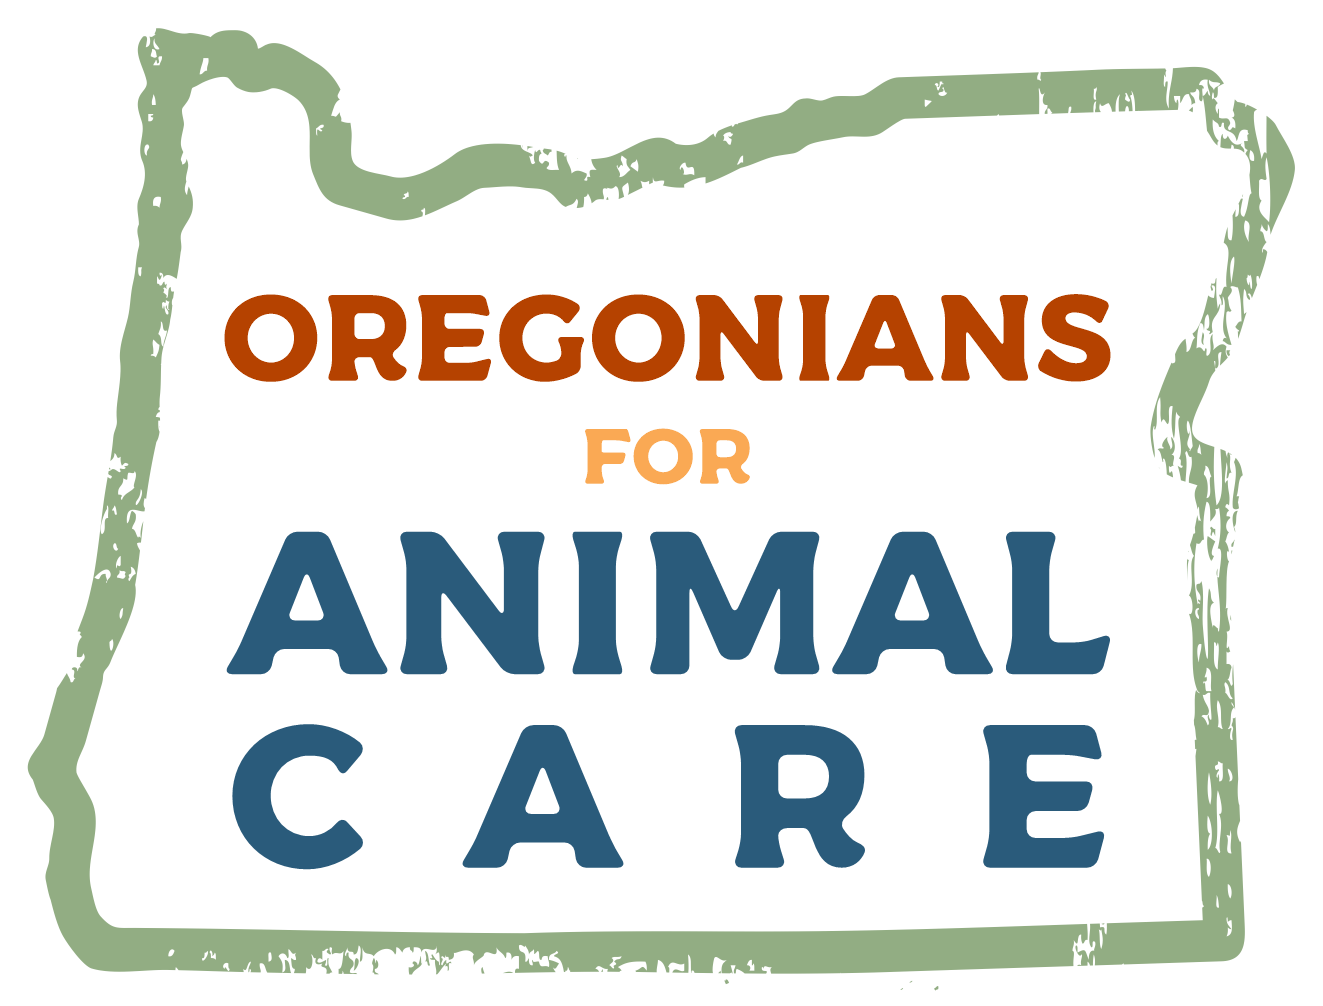 Oregonians for Animal Care